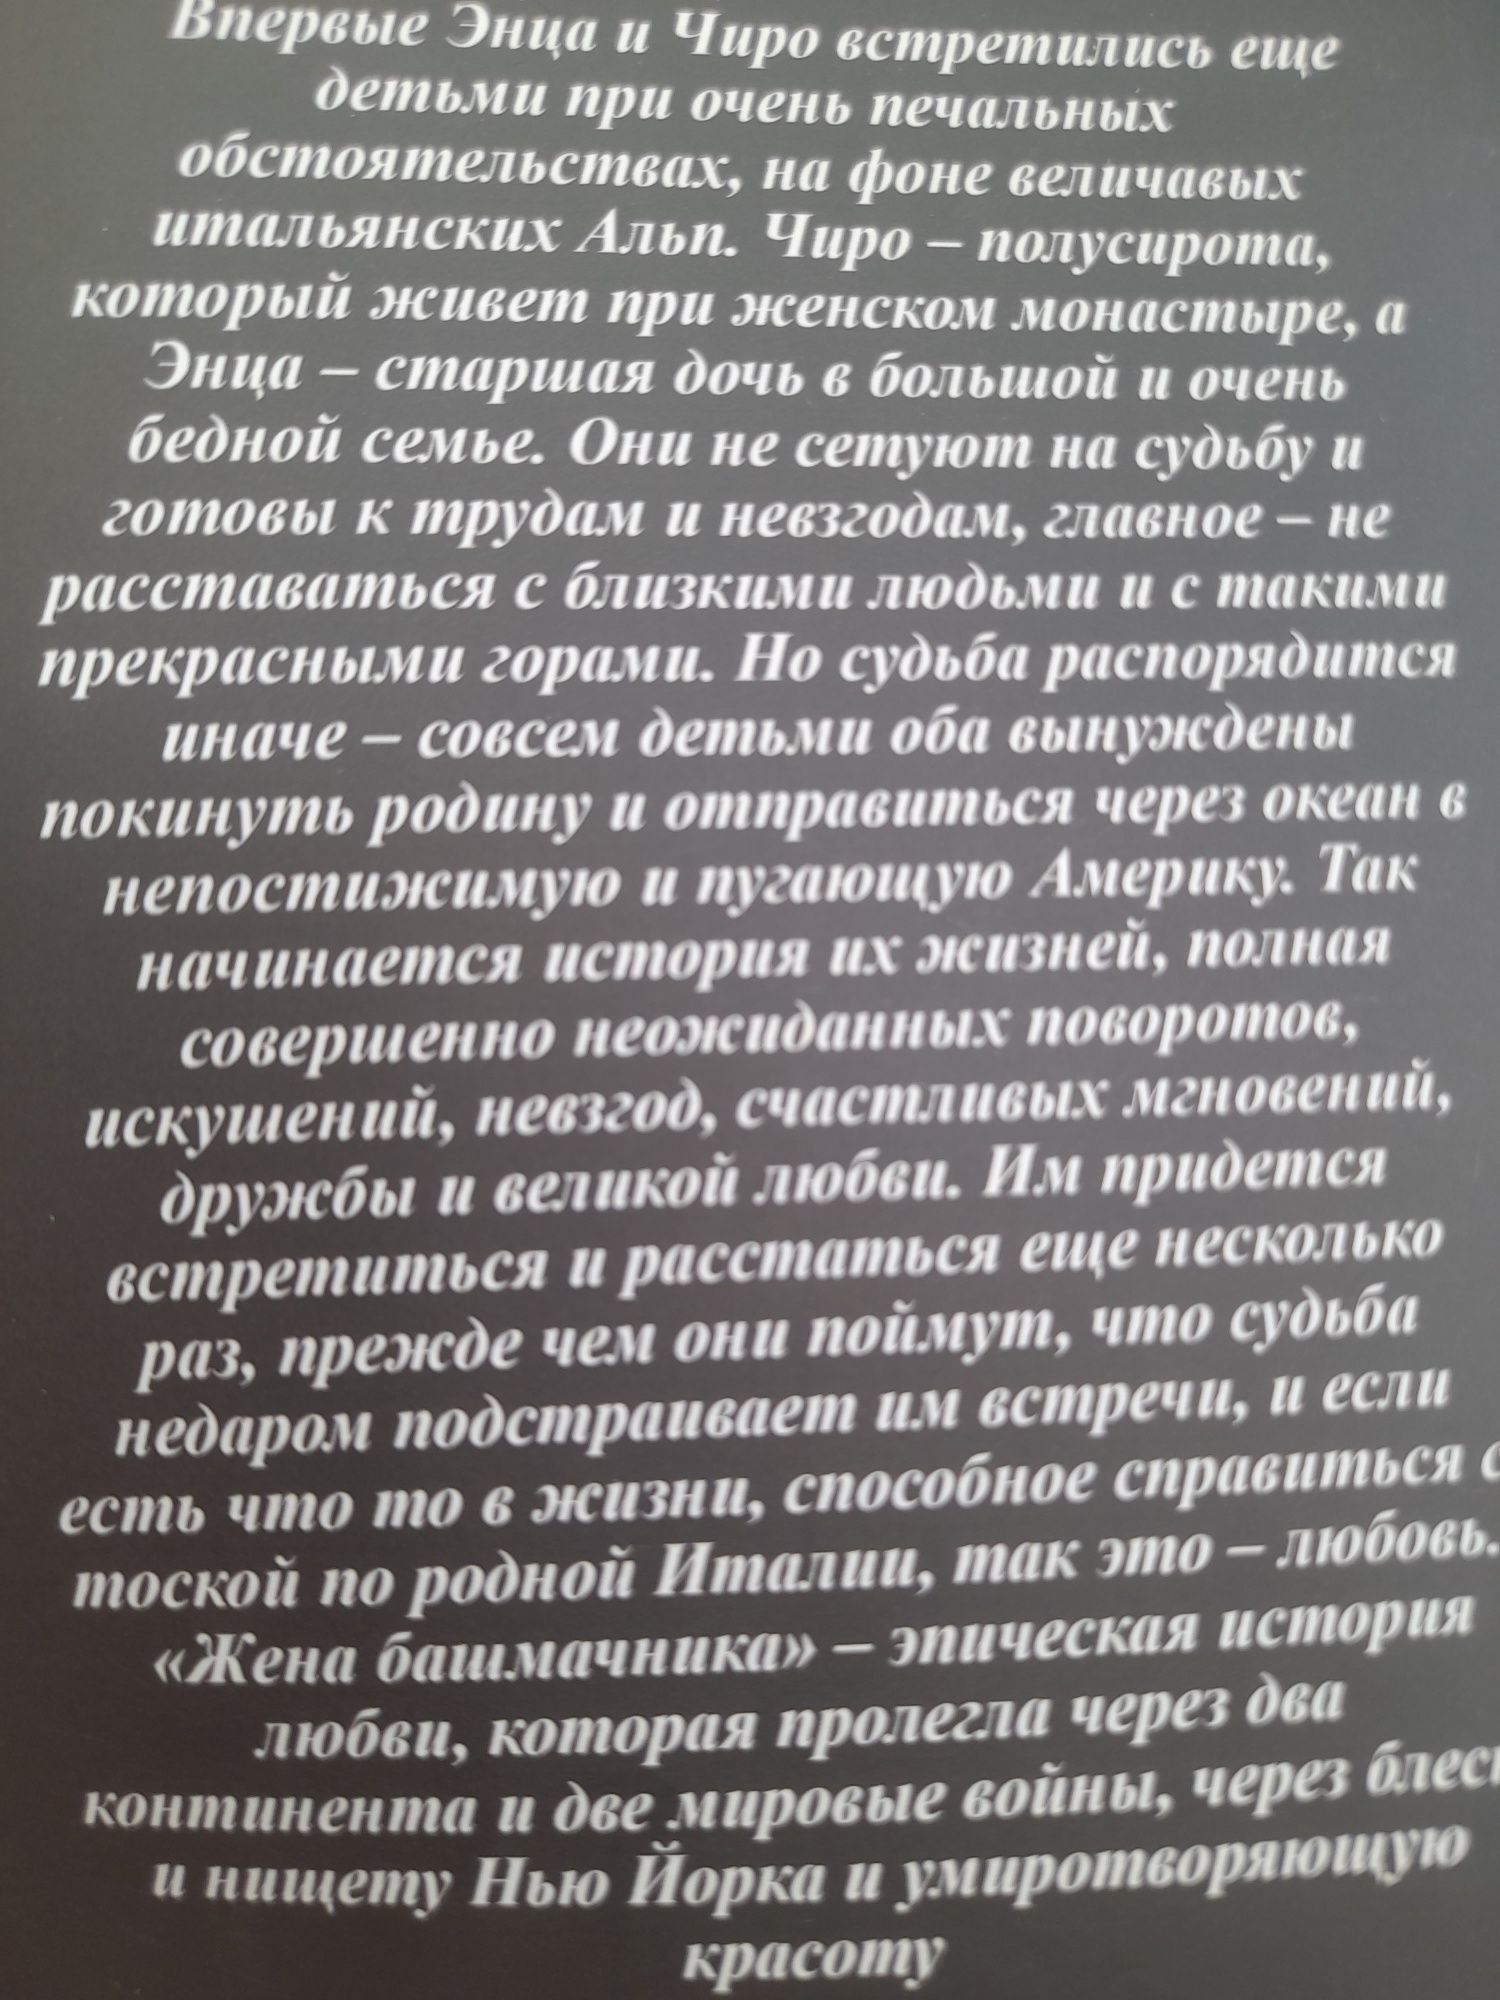 Адрианв Трижиани, "Жена башмачника ", книга издана в 36 странах